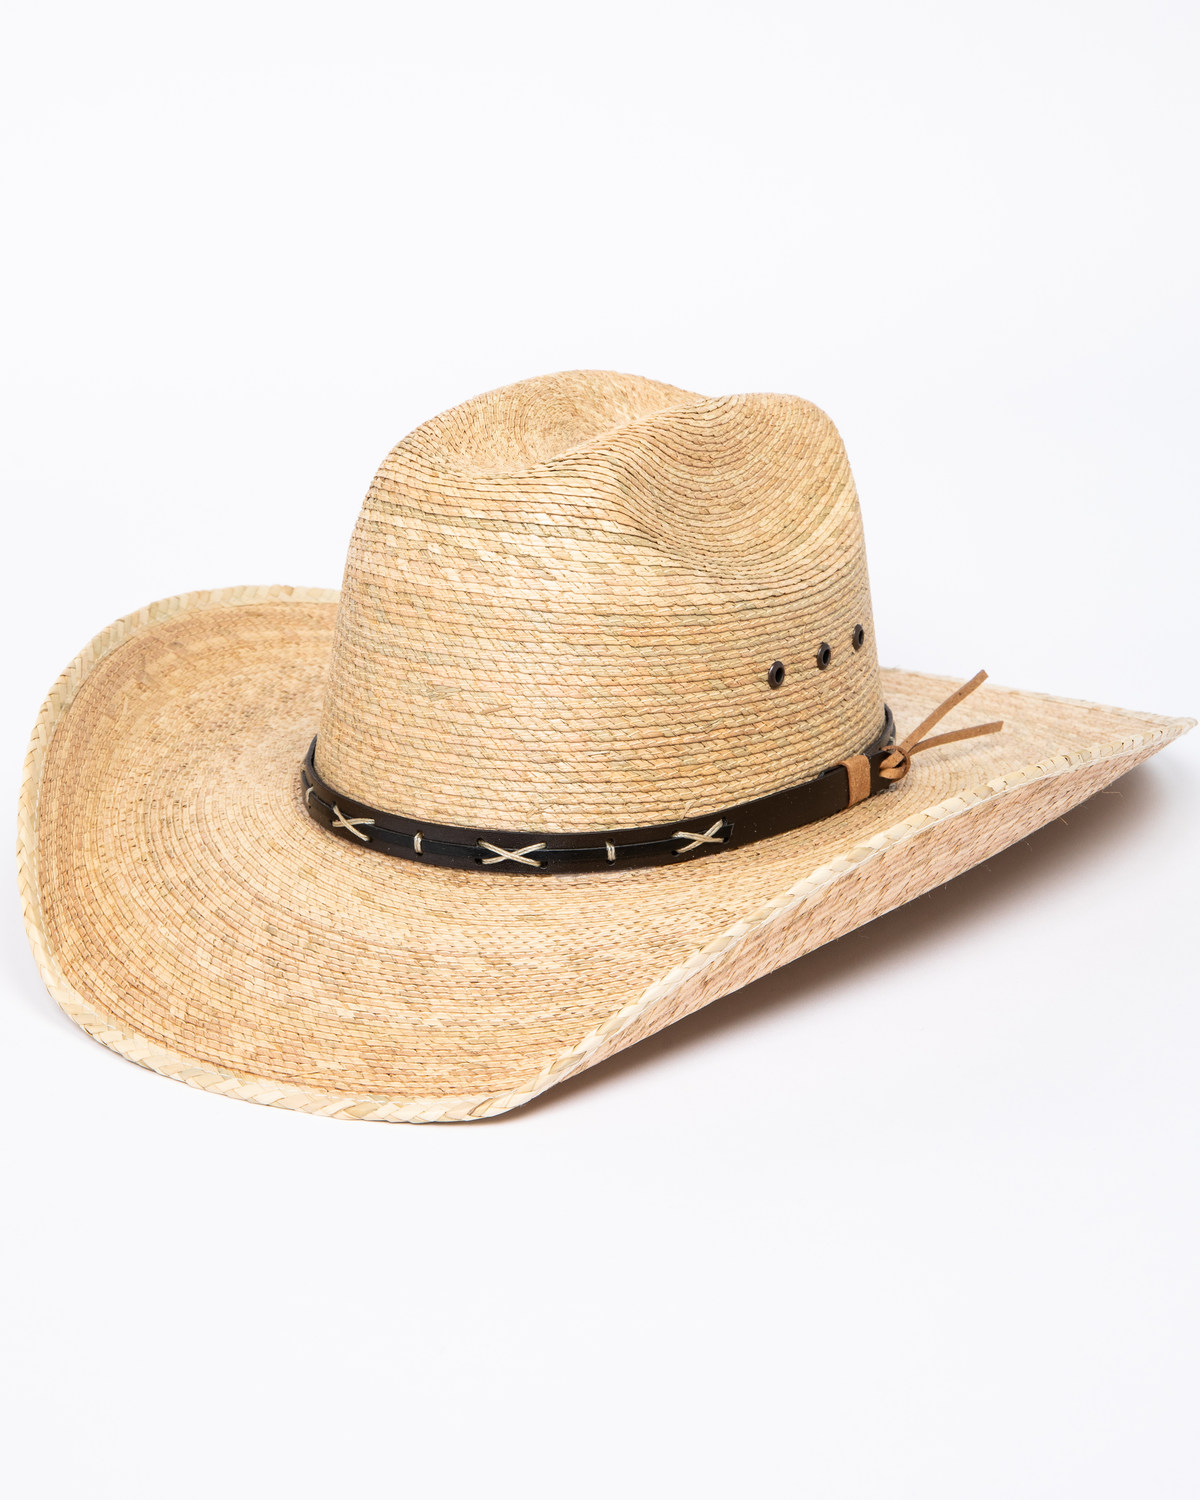 Cody James Kids' Straw Cowboy Hat